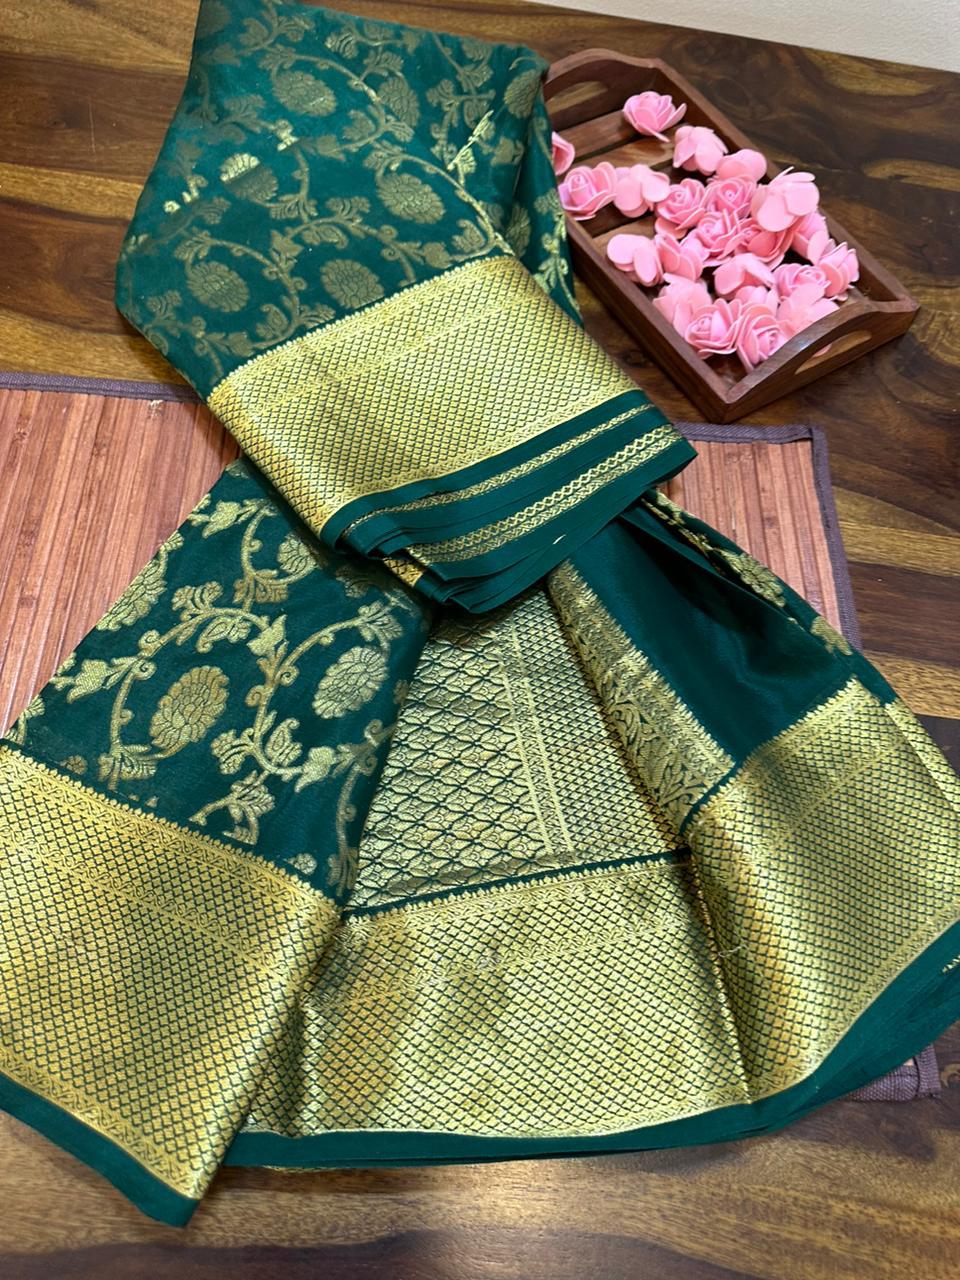 Pure Brocade Mysore Silk Crepe Sarees 